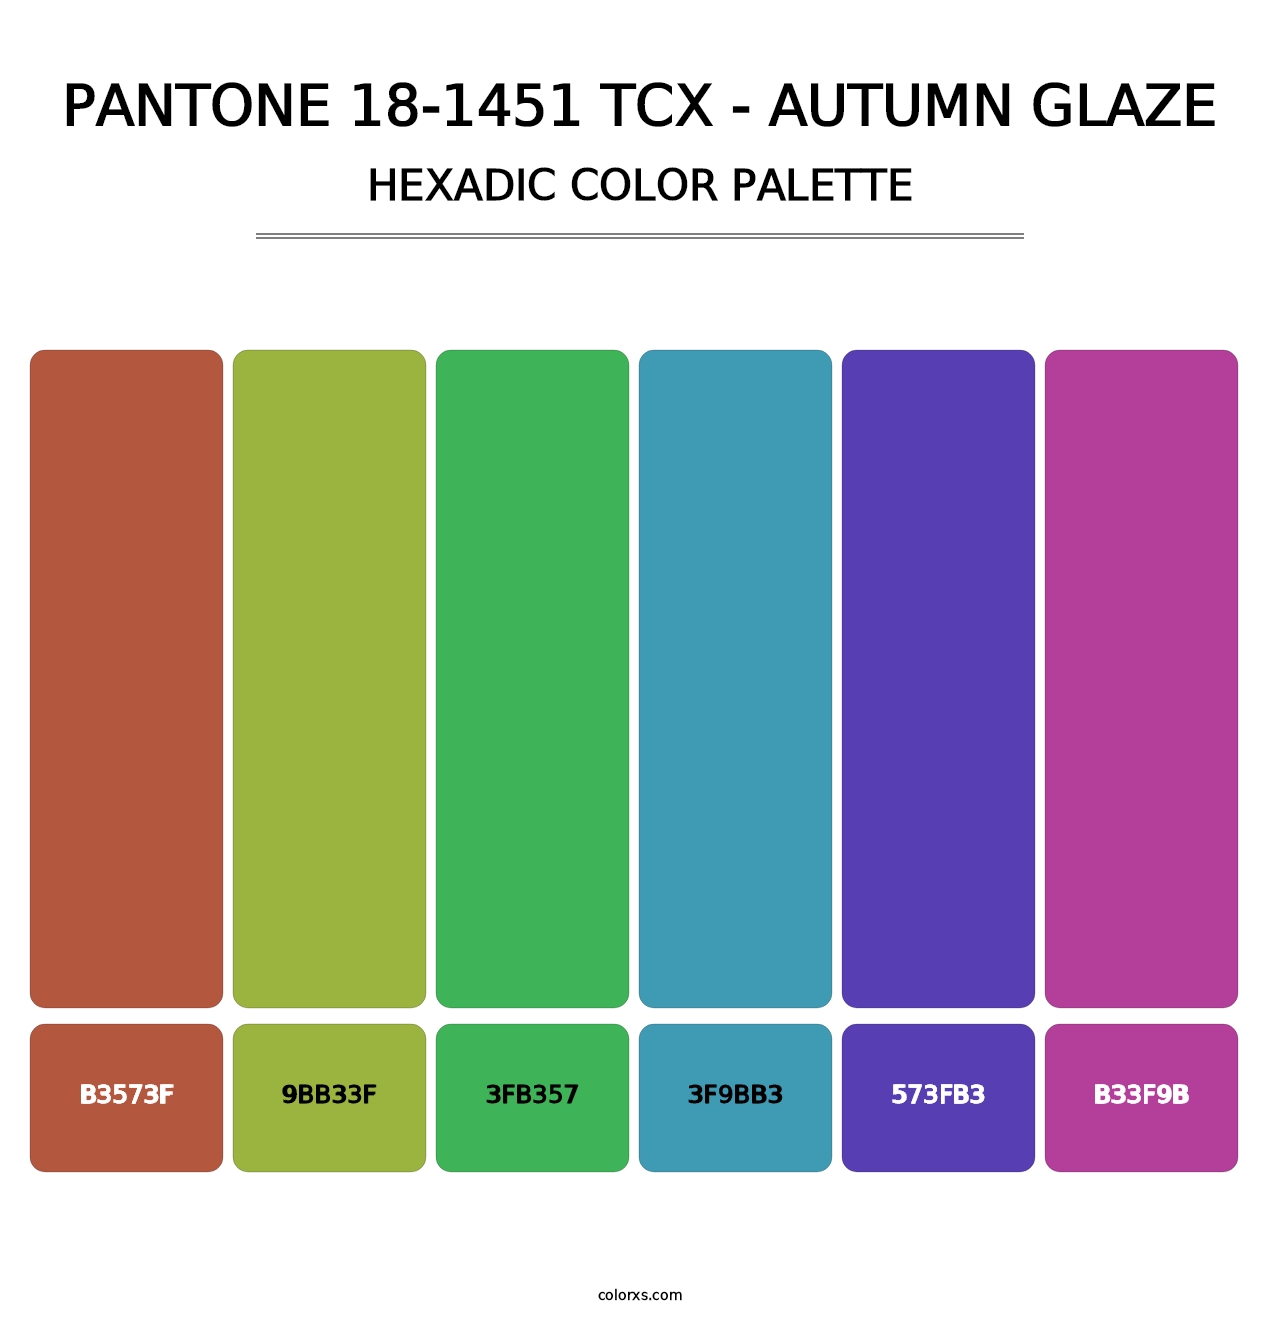 PANTONE 18-1451 TCX - Autumn Glaze - Hexadic Color Palette